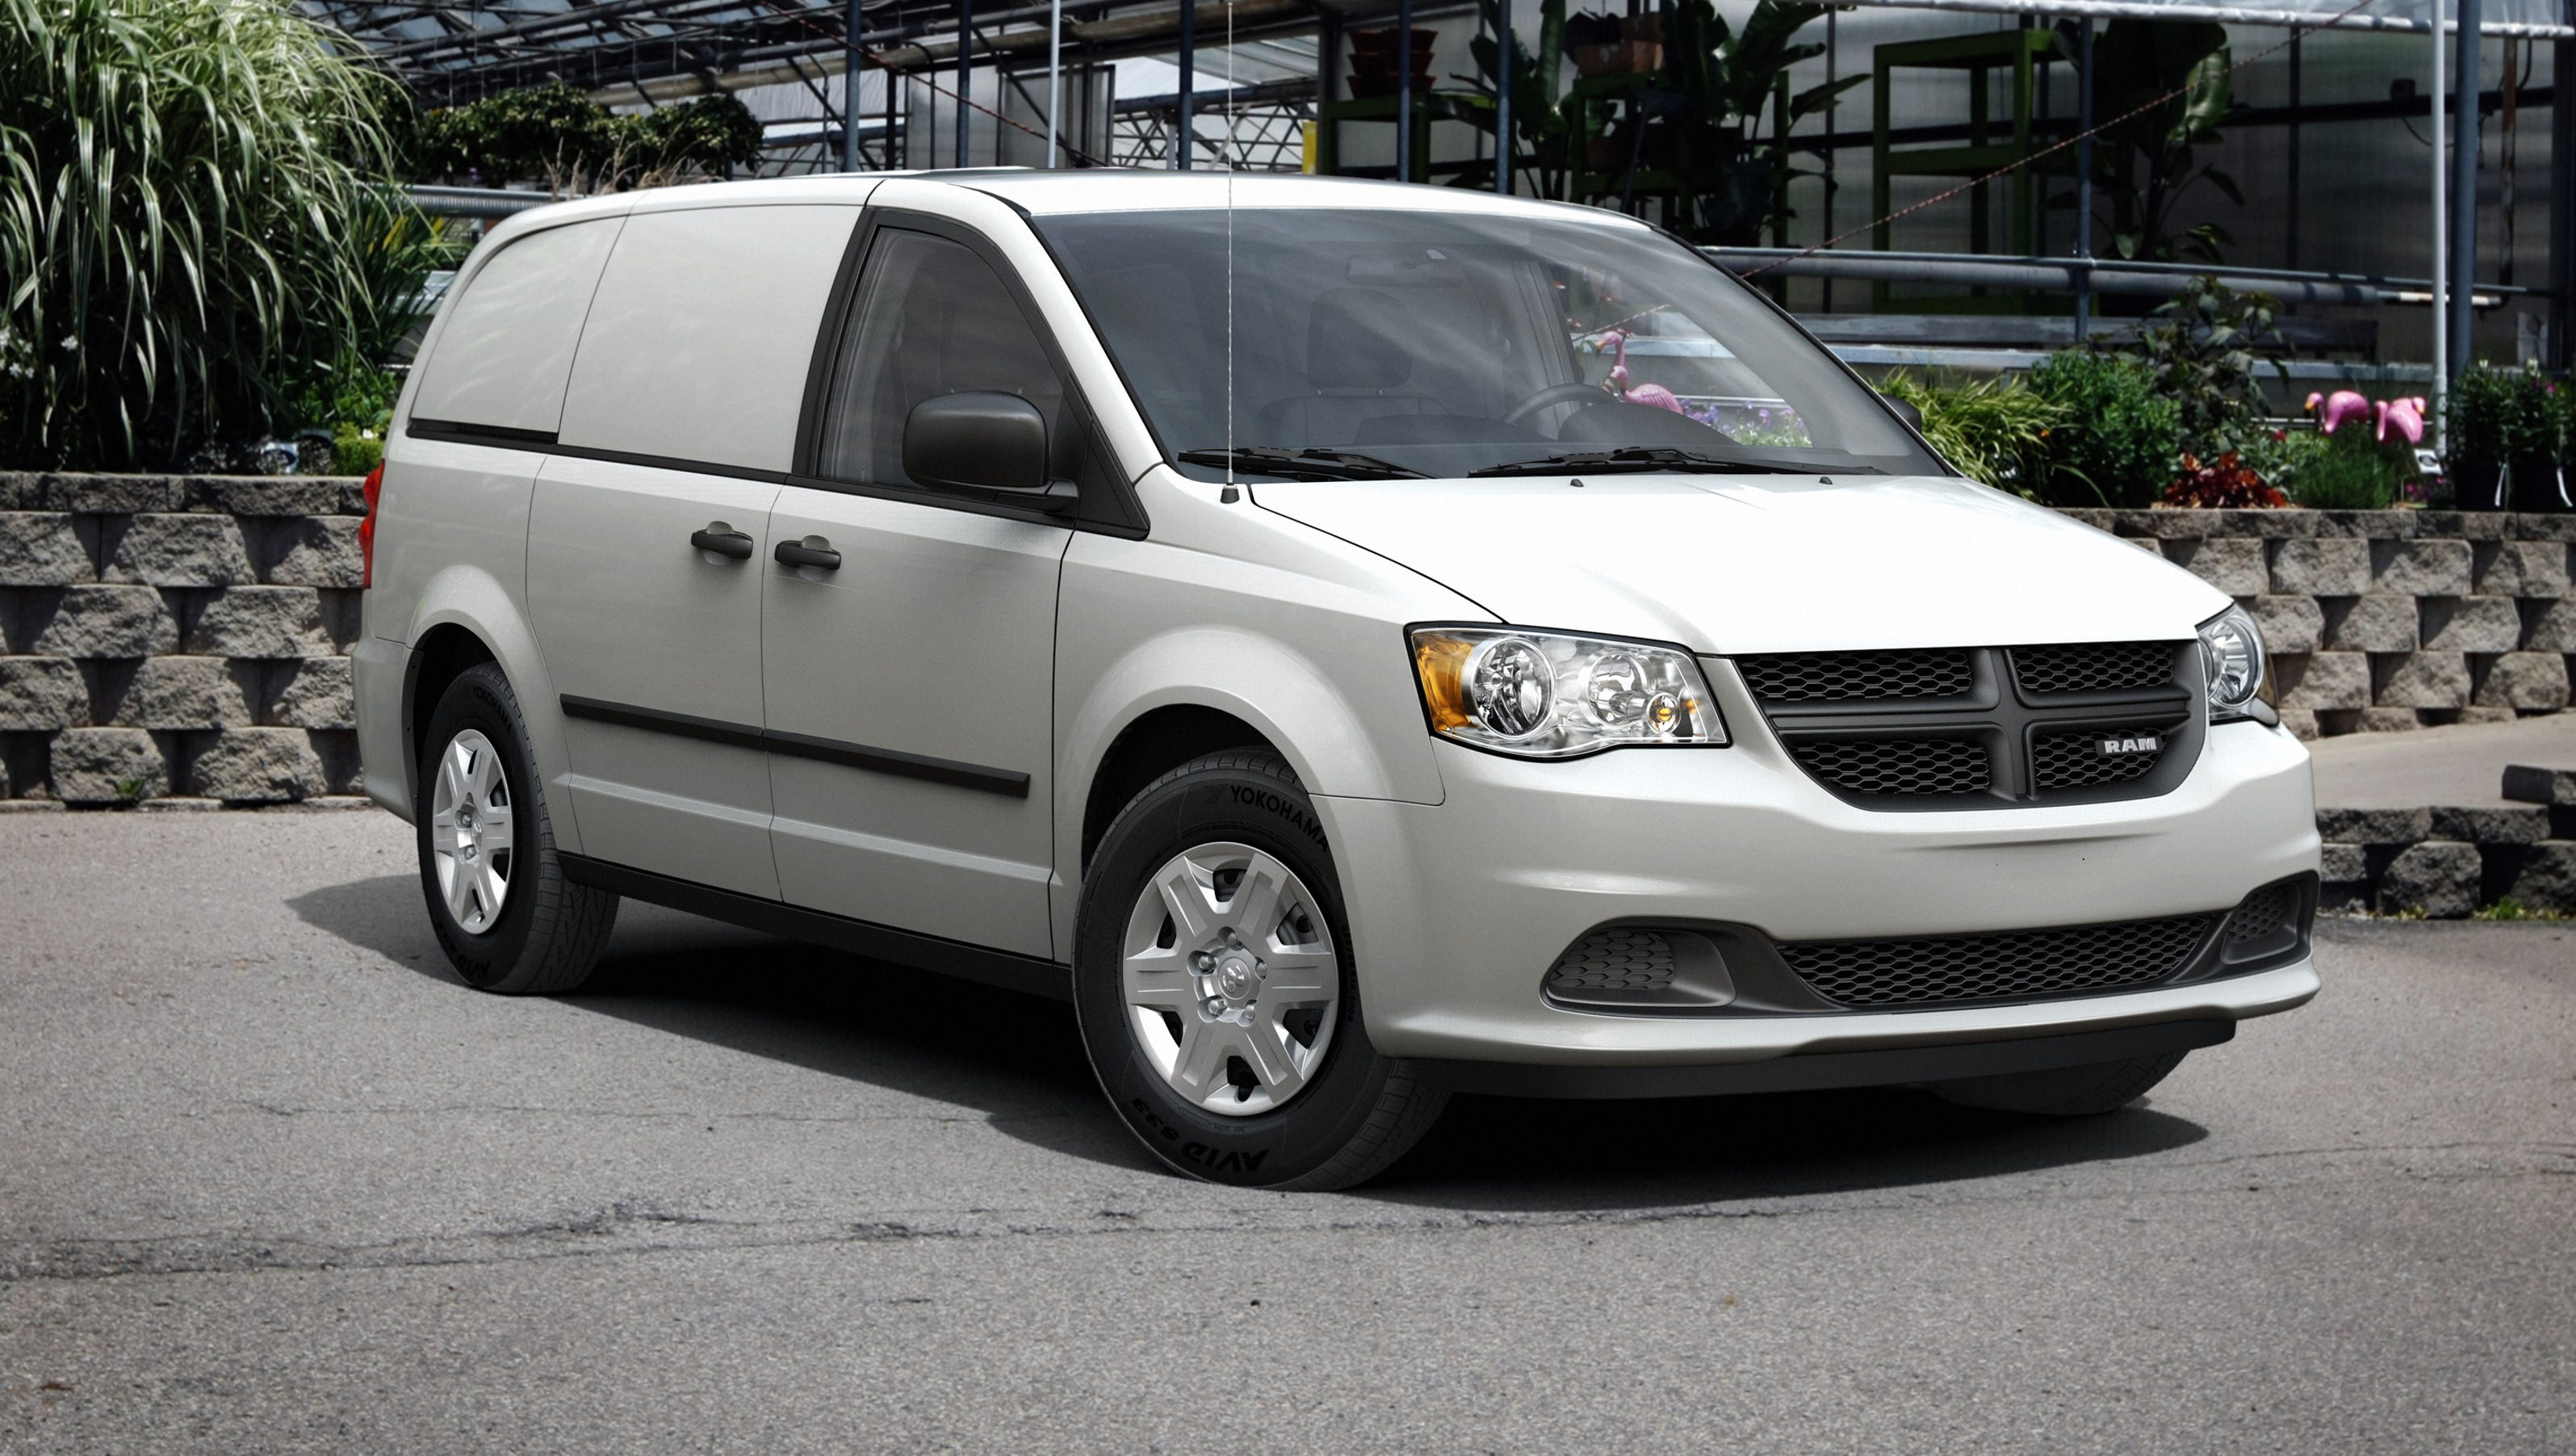 Chrysler minivan recall airbags